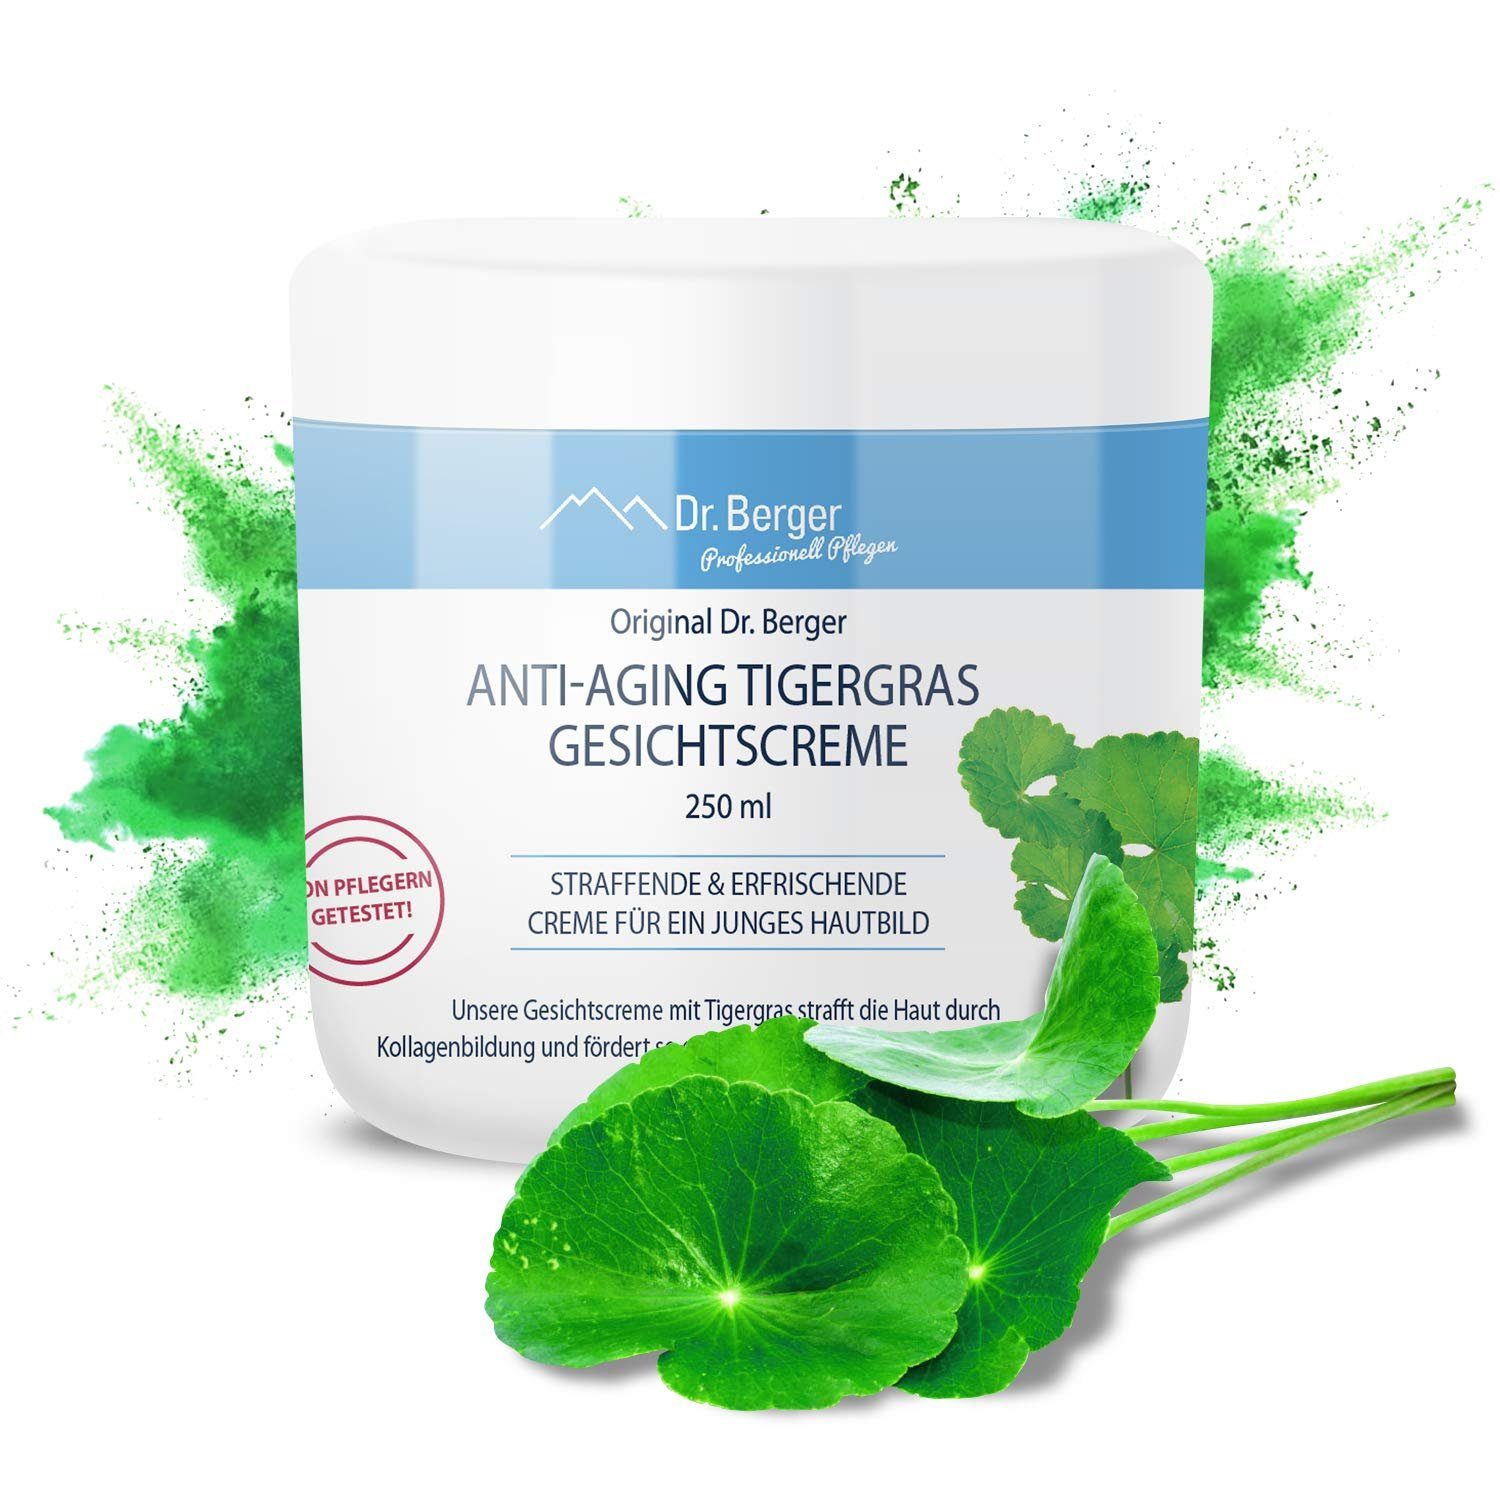 Dr. Berger Anti-Aging-Creme Original Dr. Berger Anti-Aging Tigergras Gesichtscreme 250 ml, Anti-Aging | Anti-Aging-Cremes